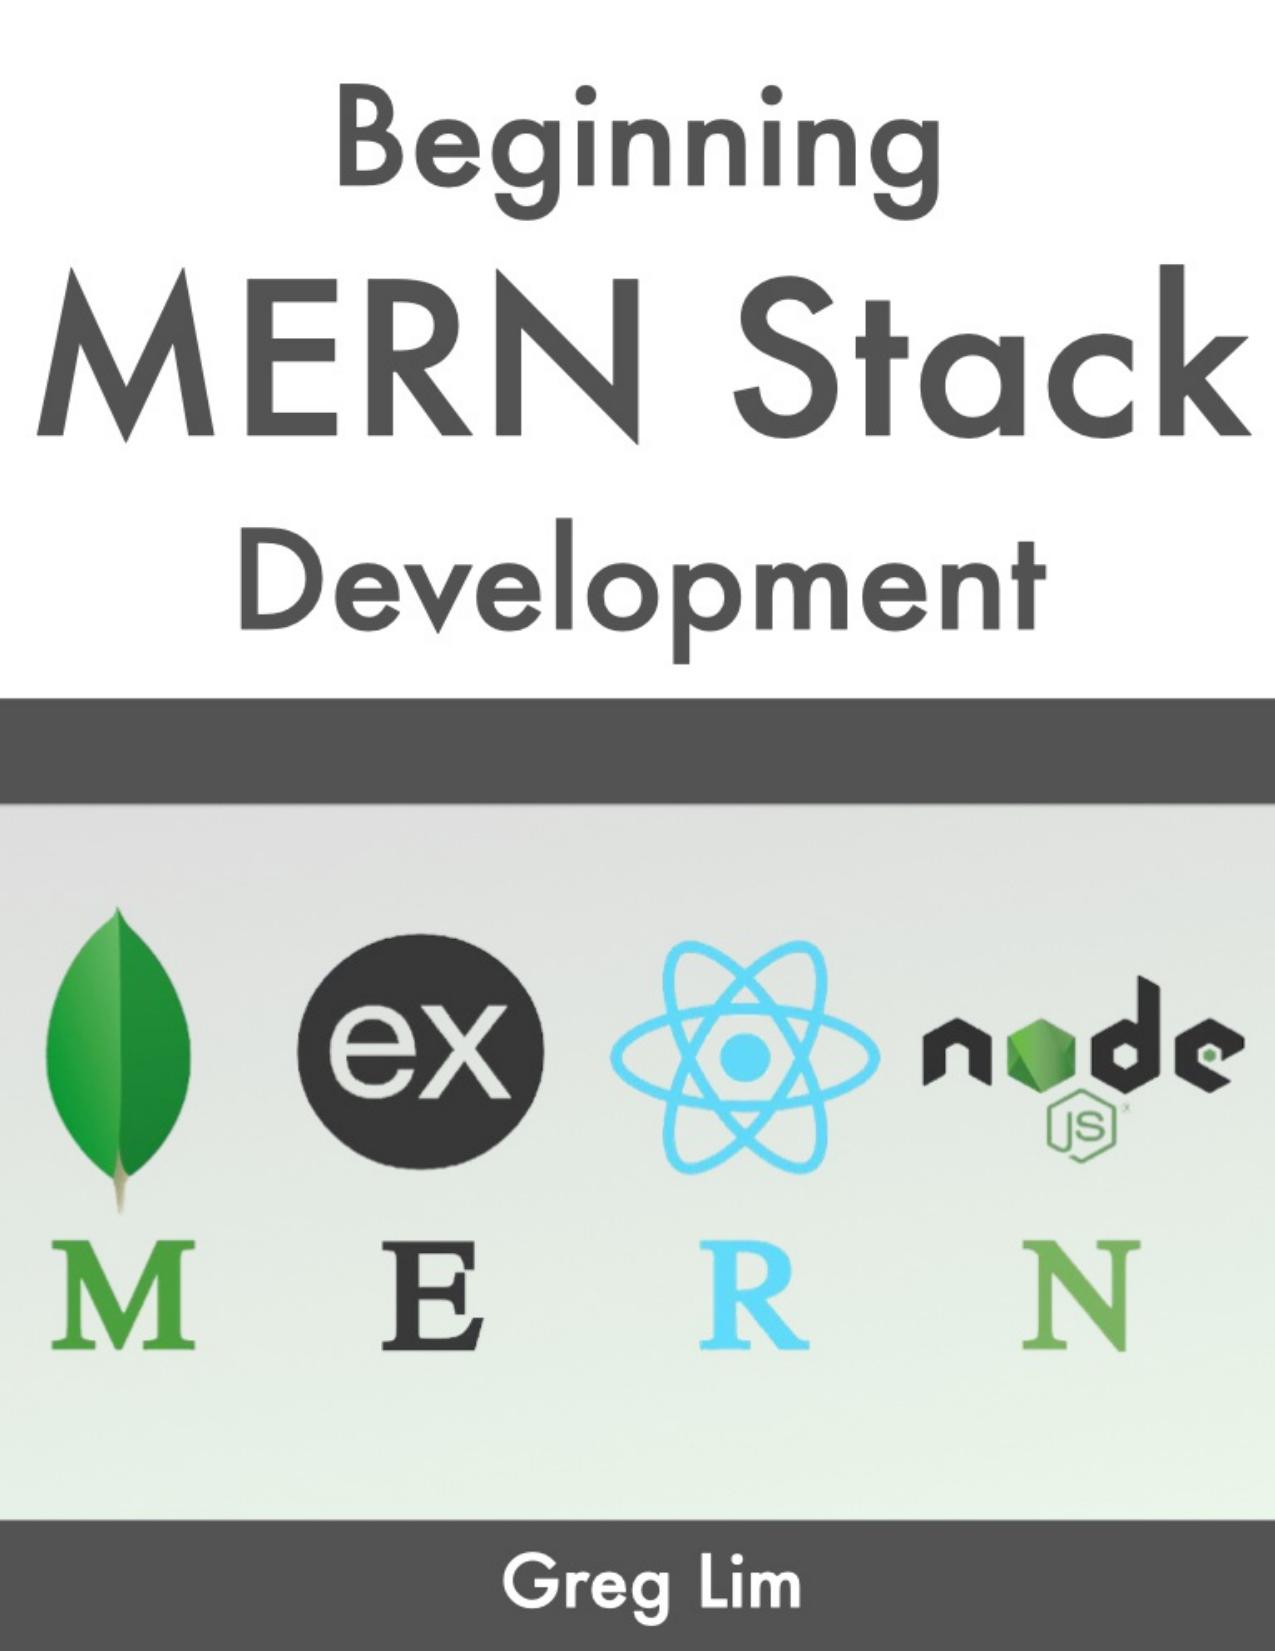 Beginning MERN Stack (MongoDB, Express, React, Node.js)